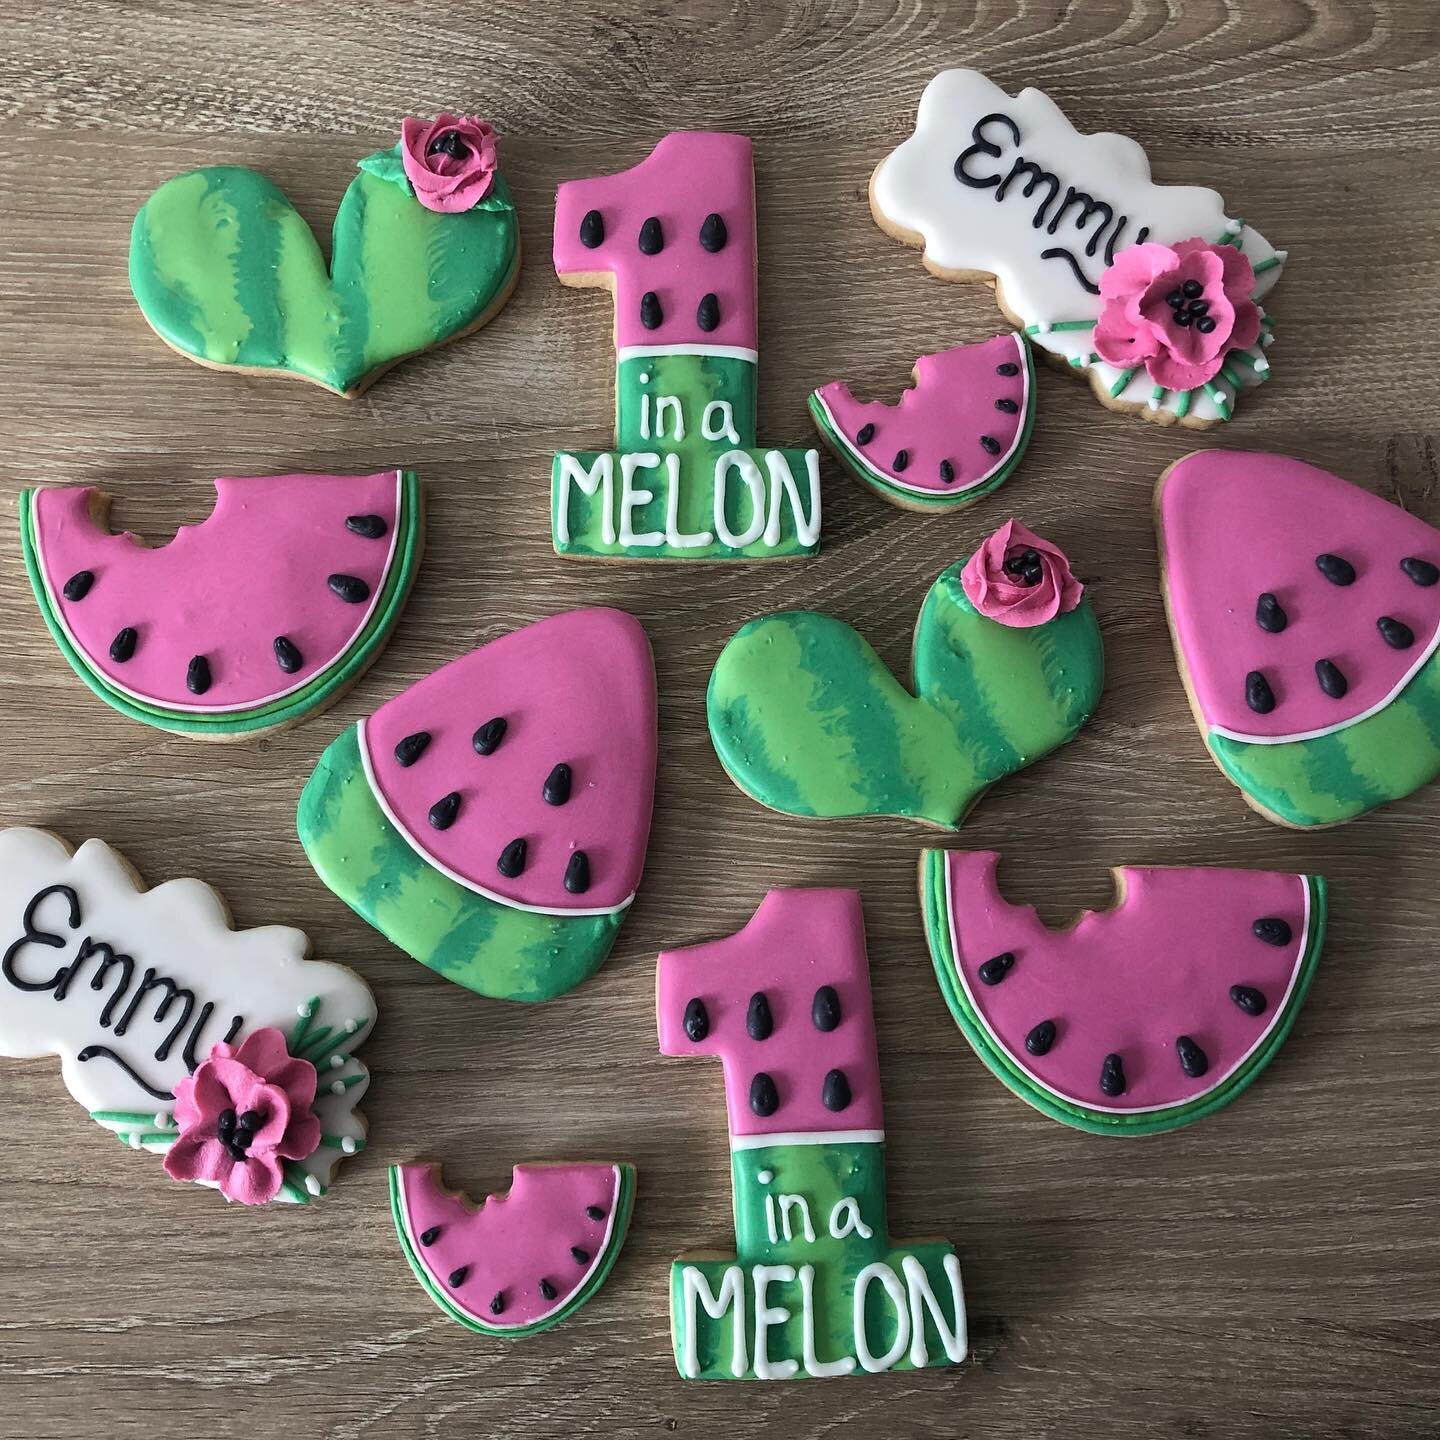 Sweet little 🍉 theme for a sweet little girl 
#oneinamelon #watermelon #cookiesofinstagram #firstbirthday